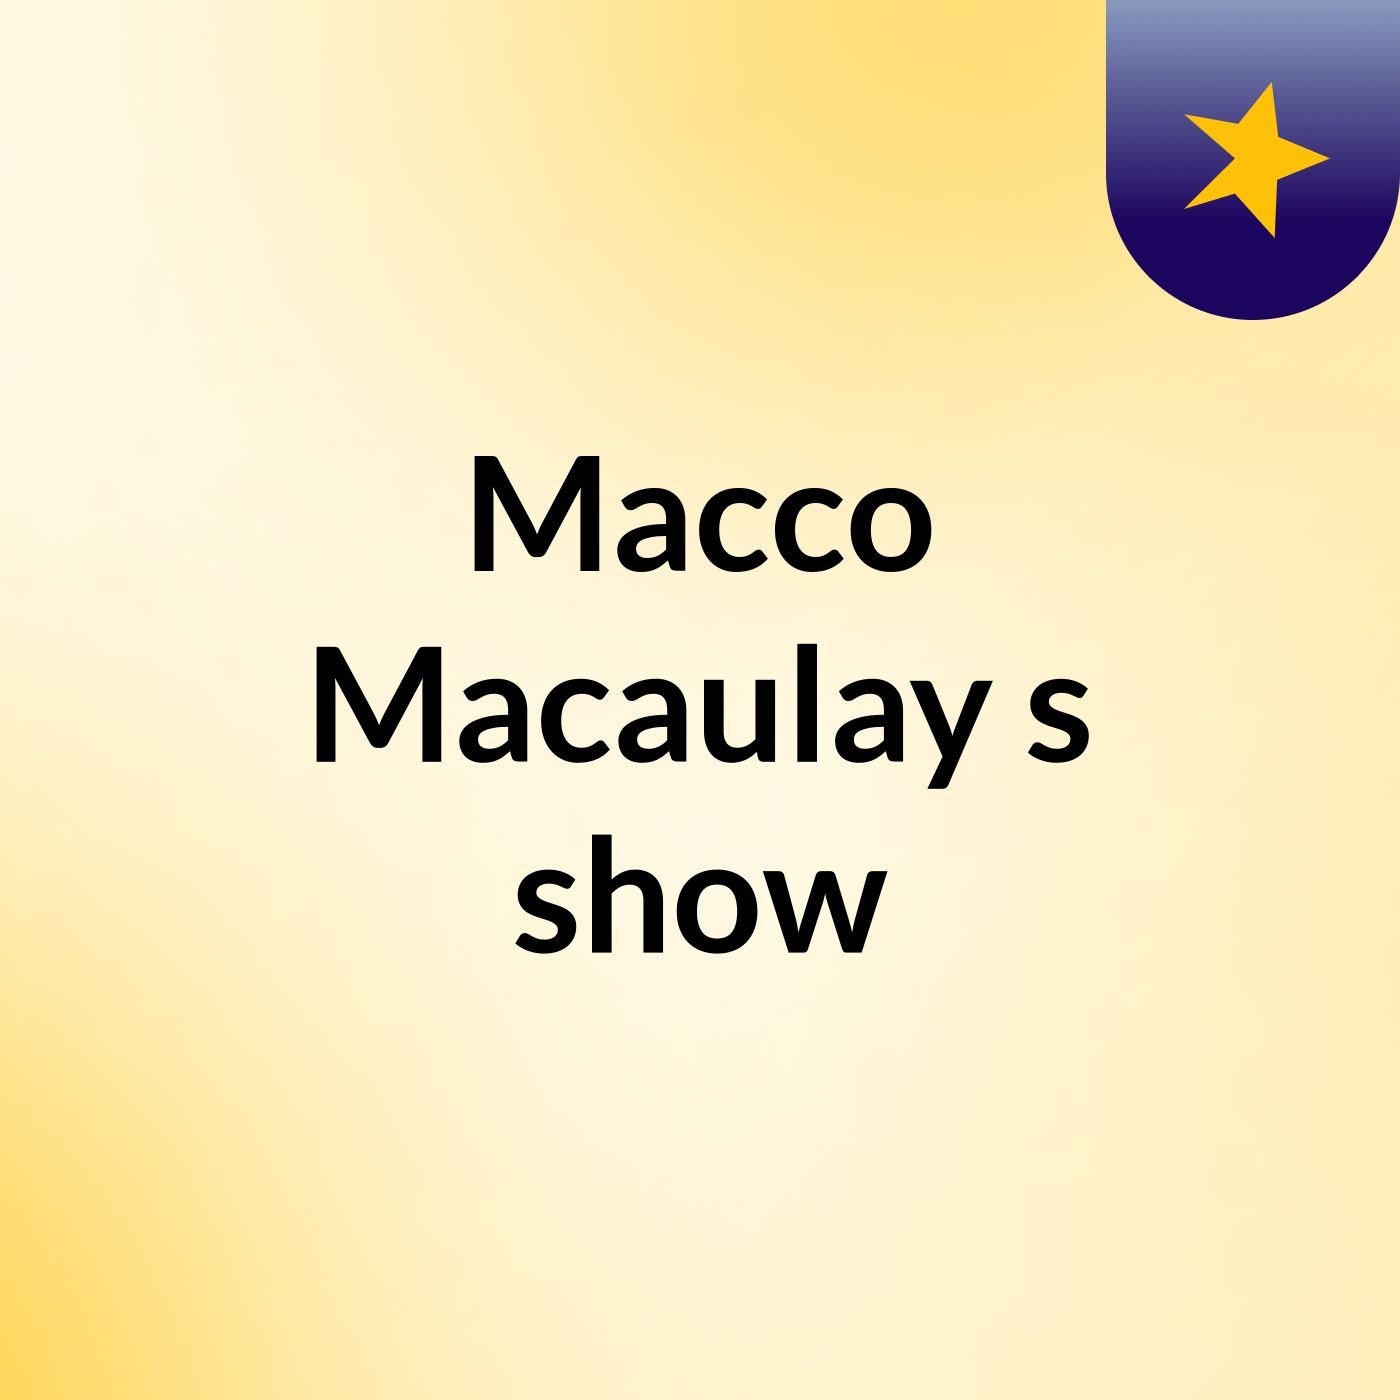 Macco Macaulay's show